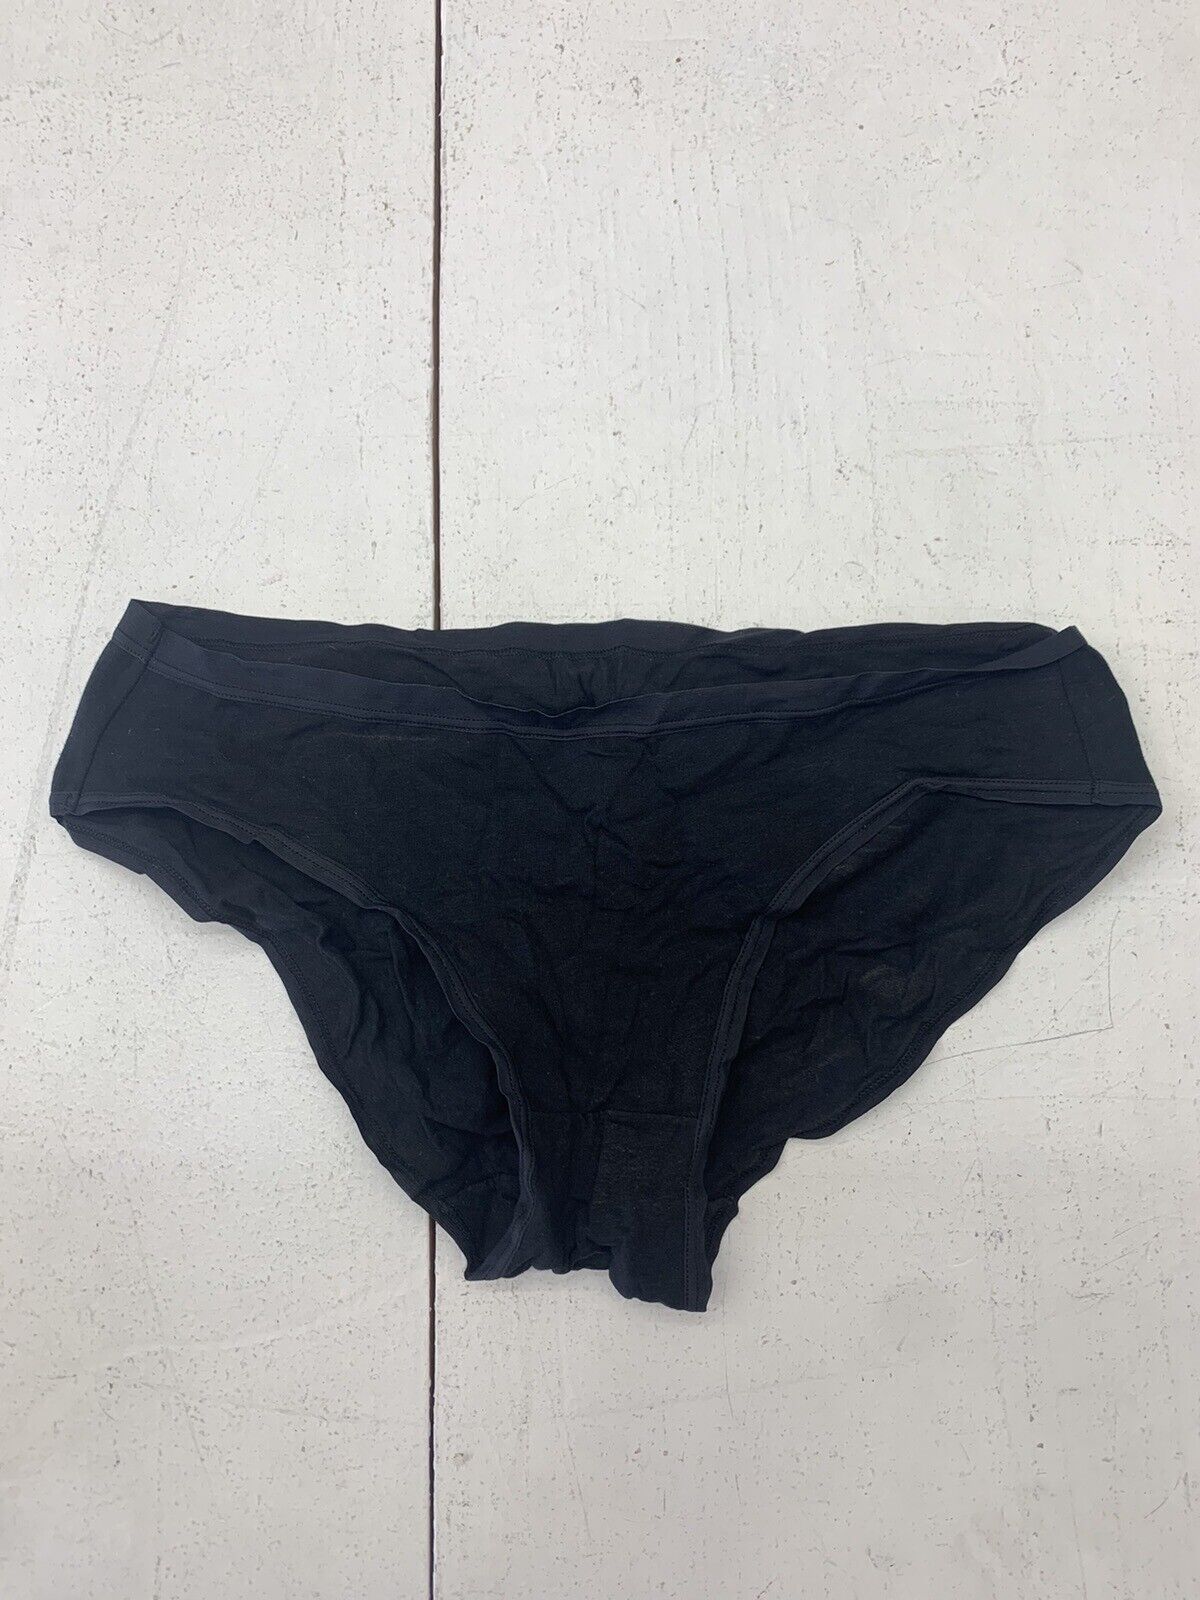 YADIFEN Women's Bikini Panties Cotton Underwear Panty Low Waist Briefs ( Black-5 Pack, S) : : Clothing, Shoes & Accessories